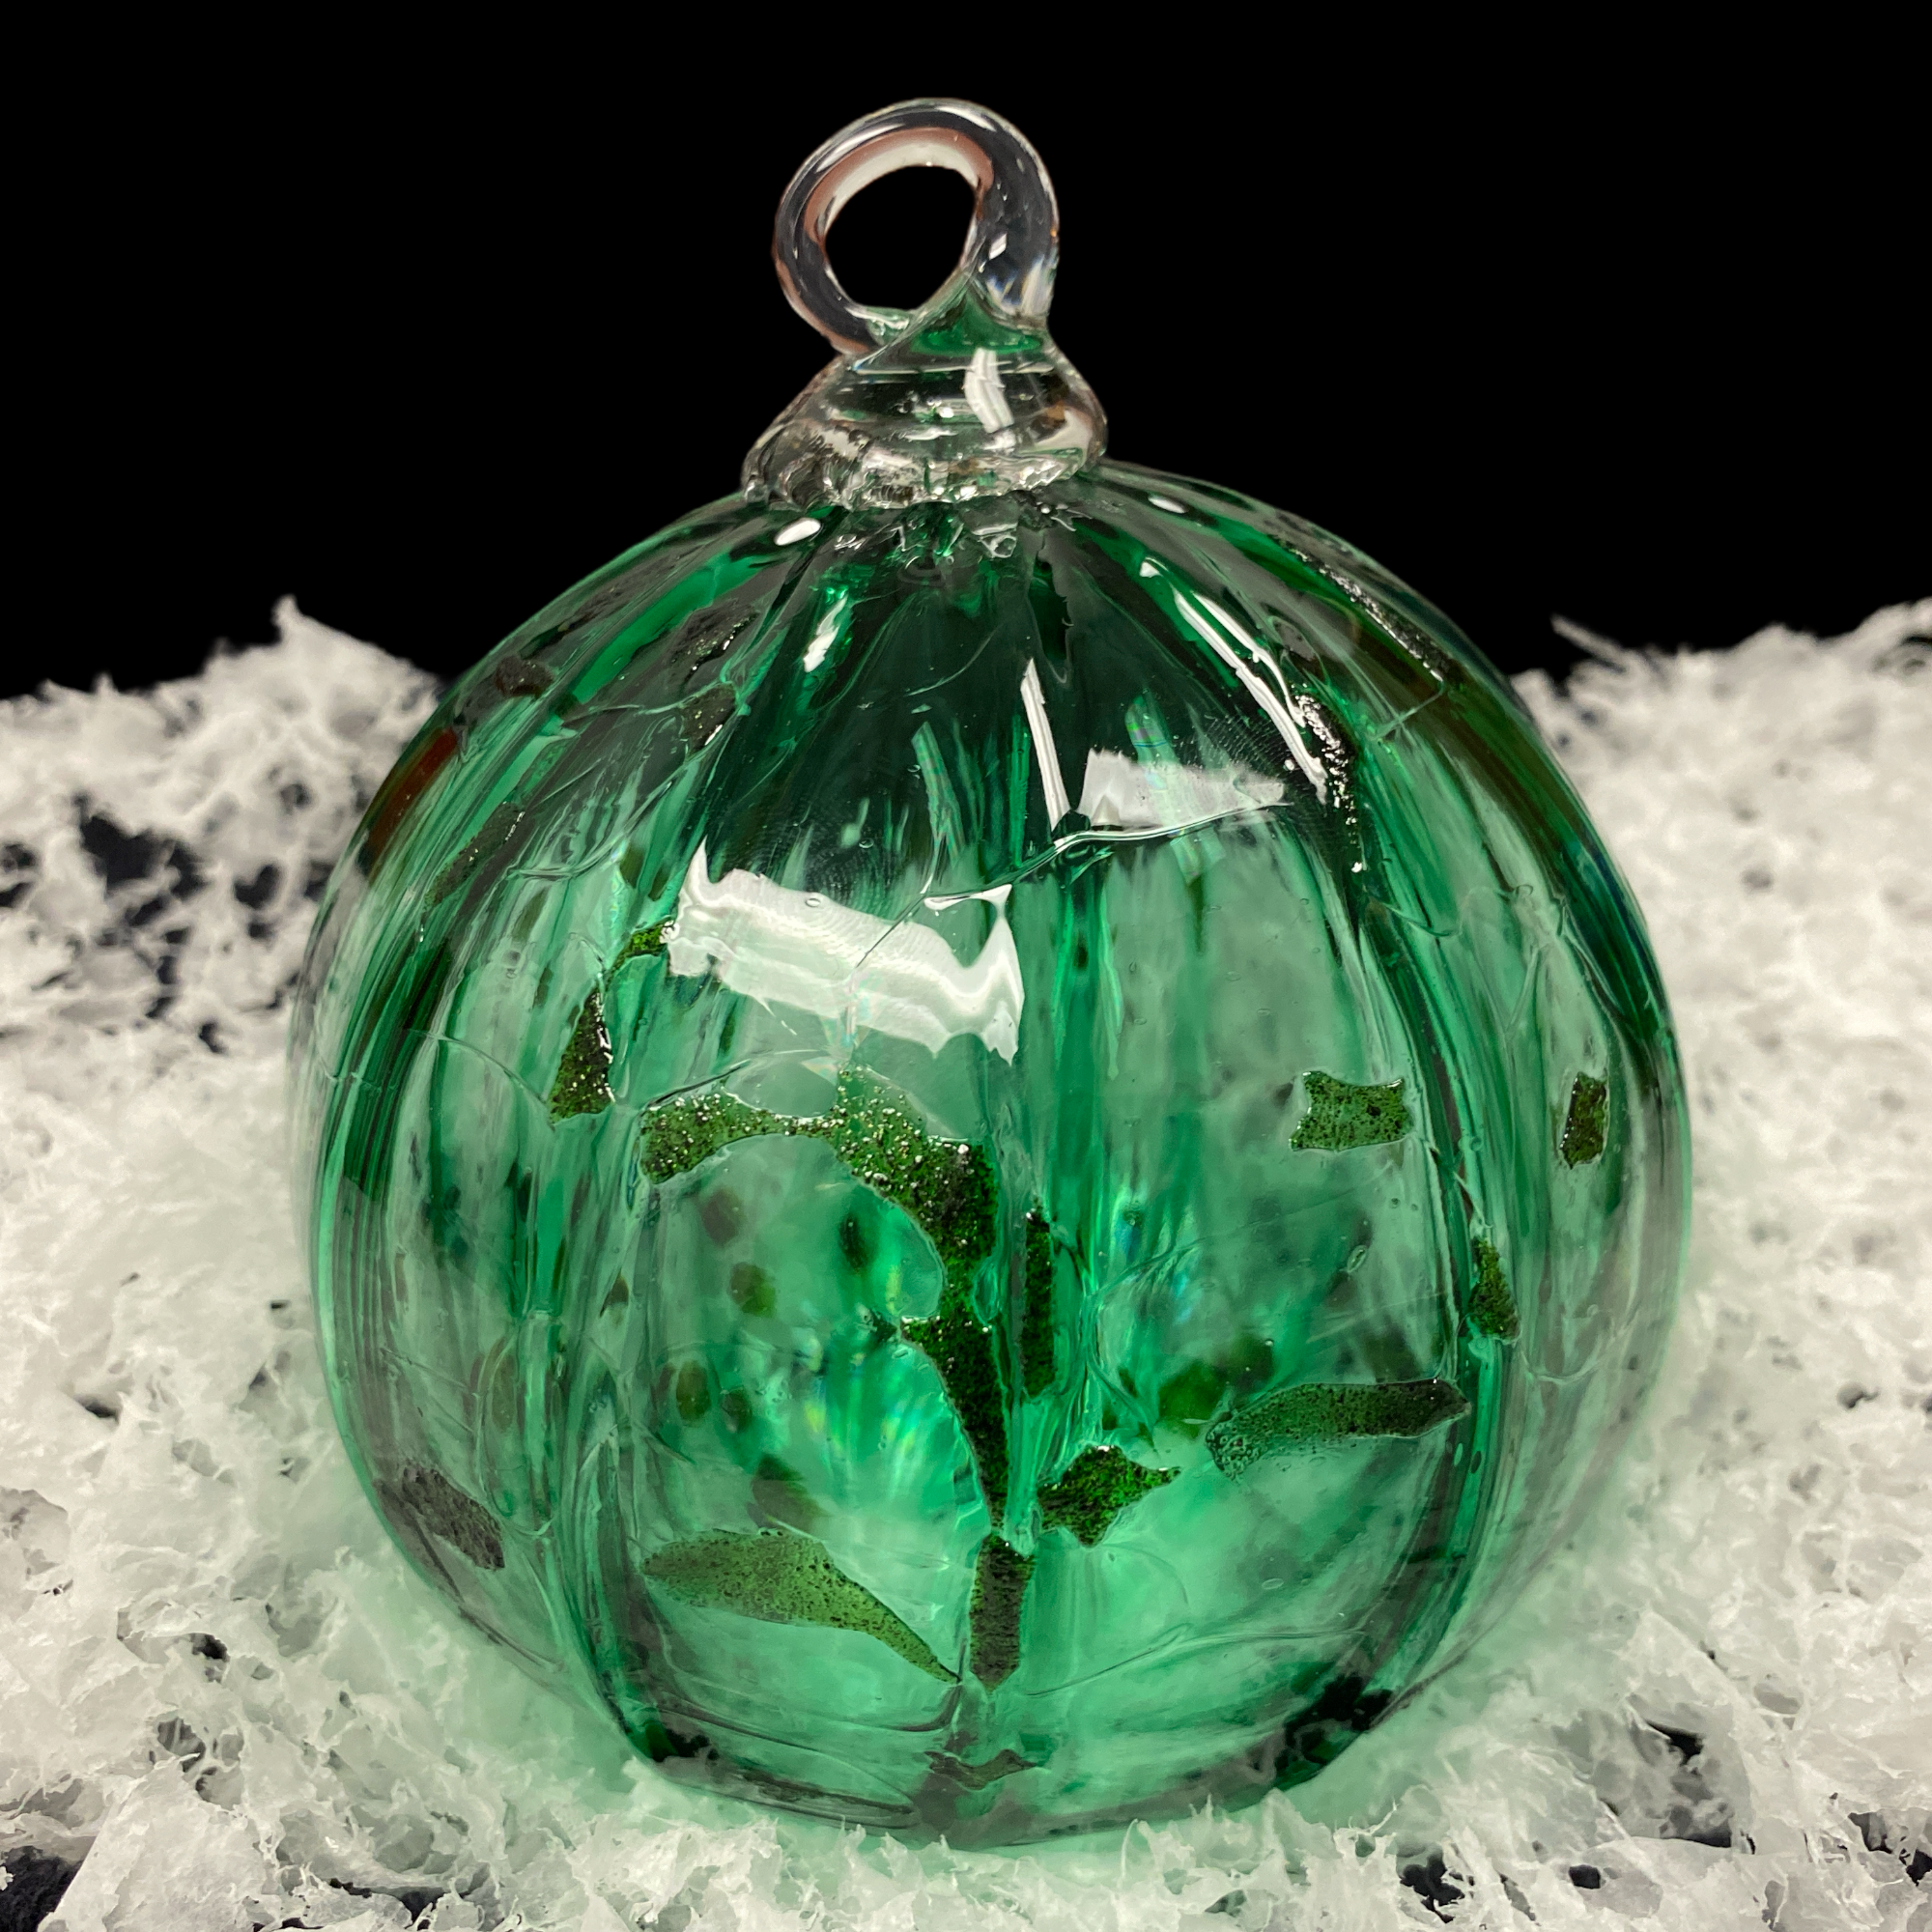 2022 Handblown Glass Ornaments